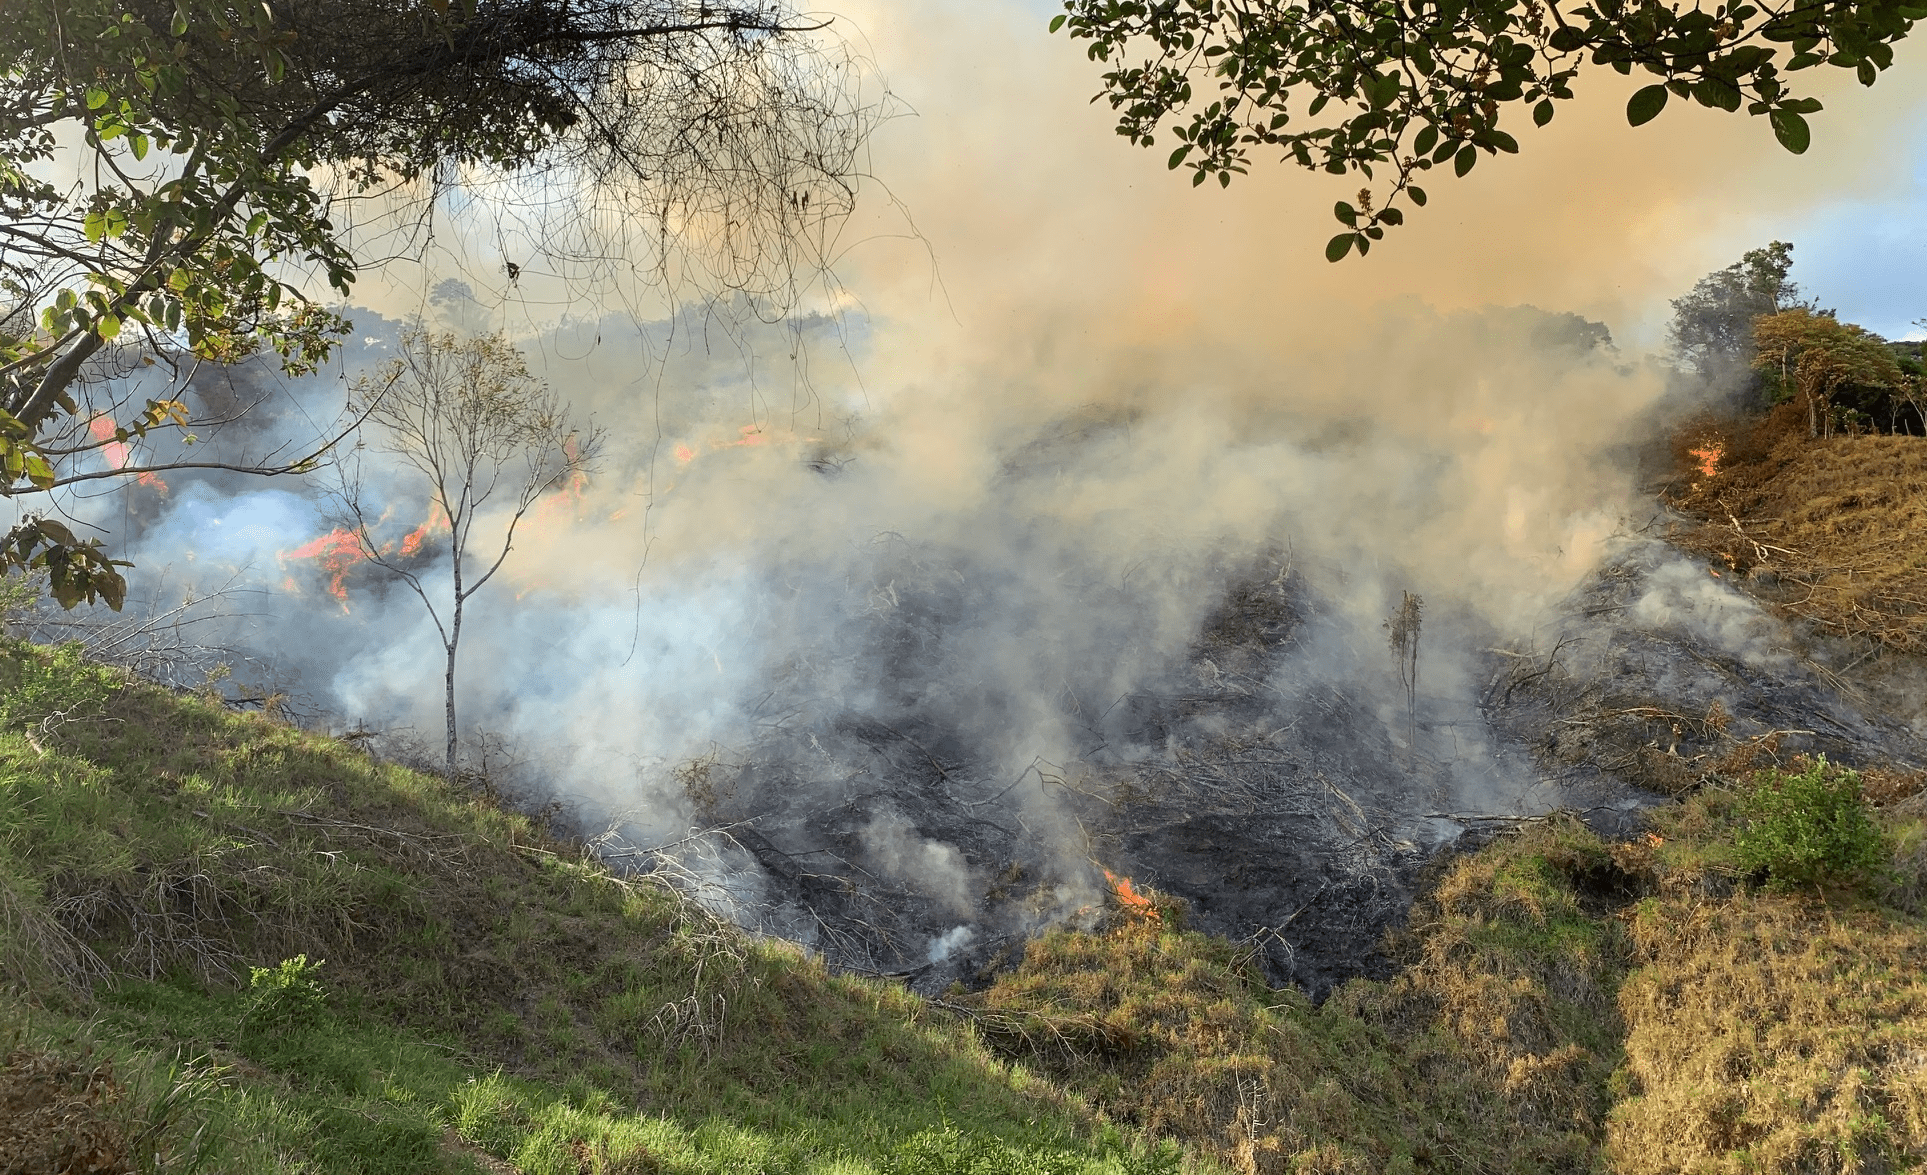 Burning land Causes Devastating Problems